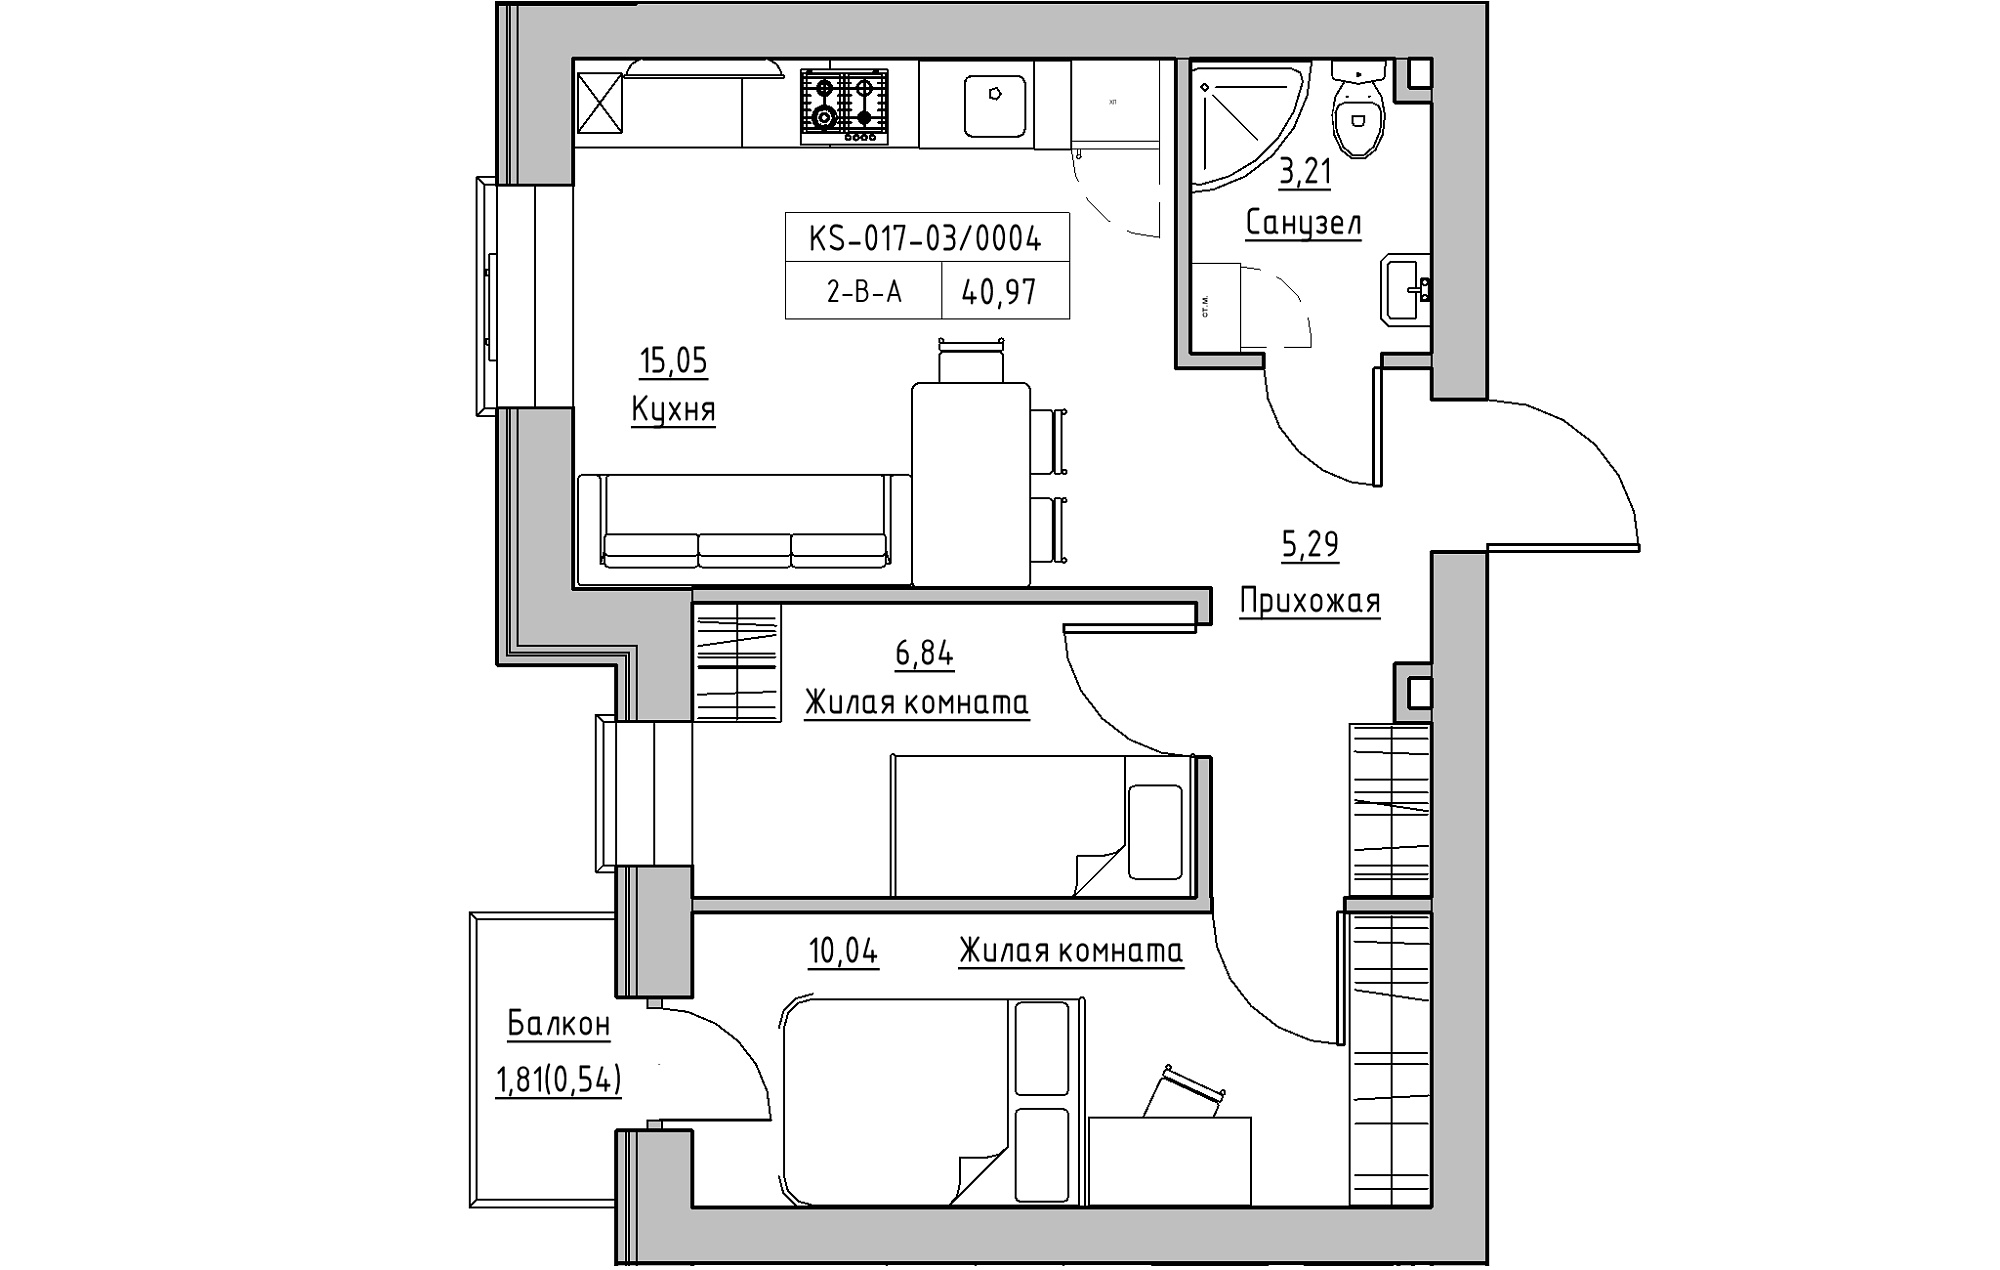 Planning 2-rm flats area 40.97m2, KS-017-03/0004.